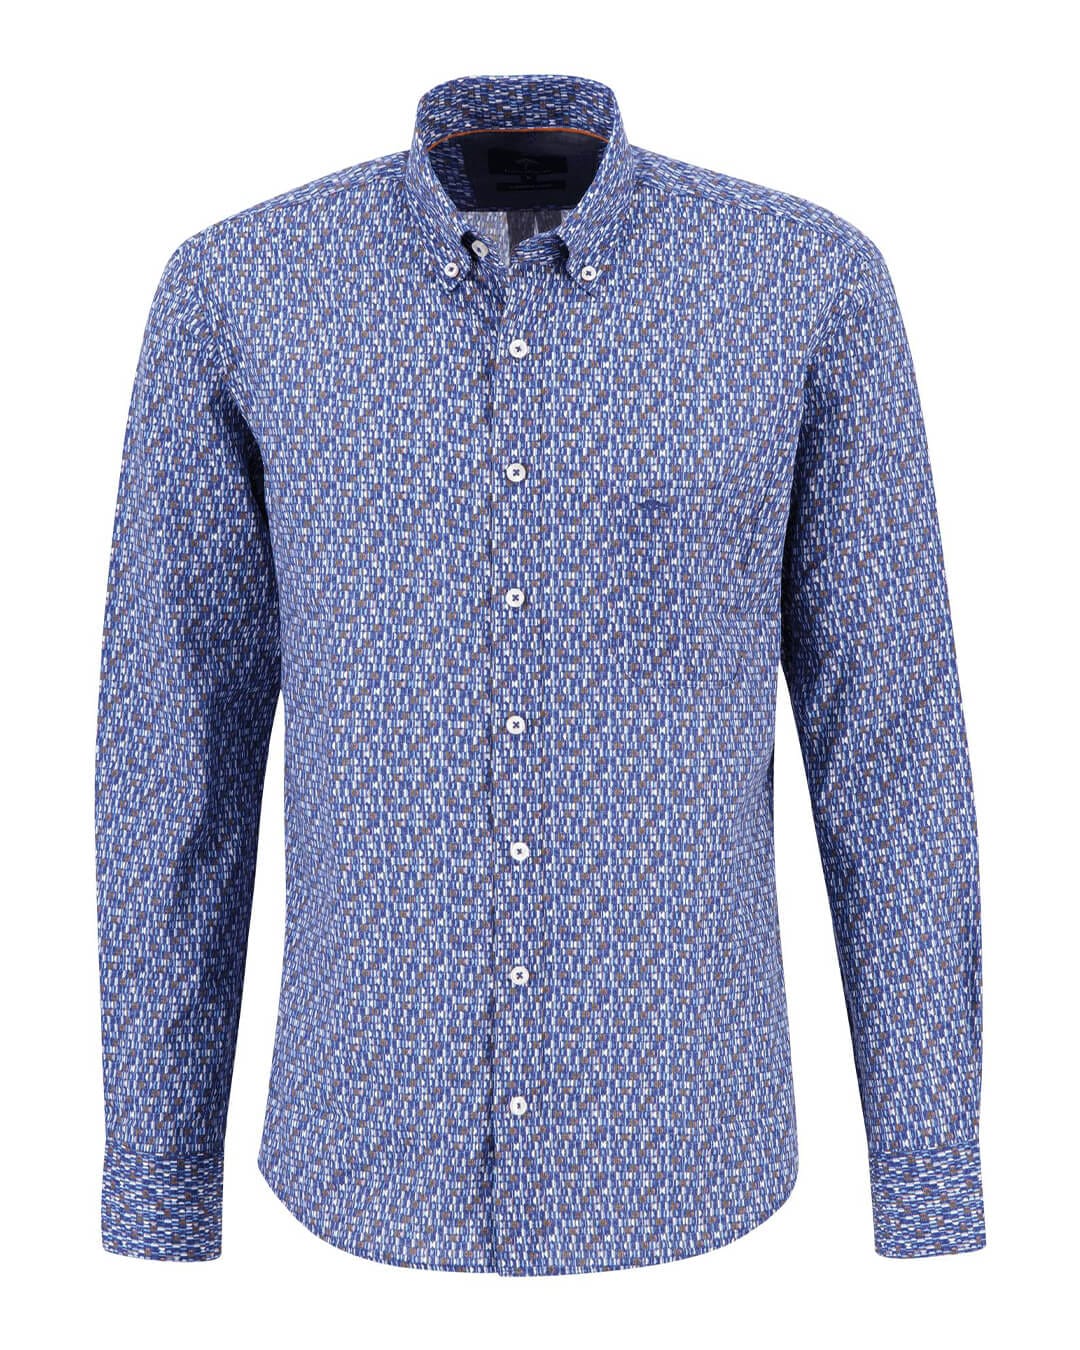 Fynch-Hatton Shirts Fynch-Hatton Blue Colourful Print Shirt